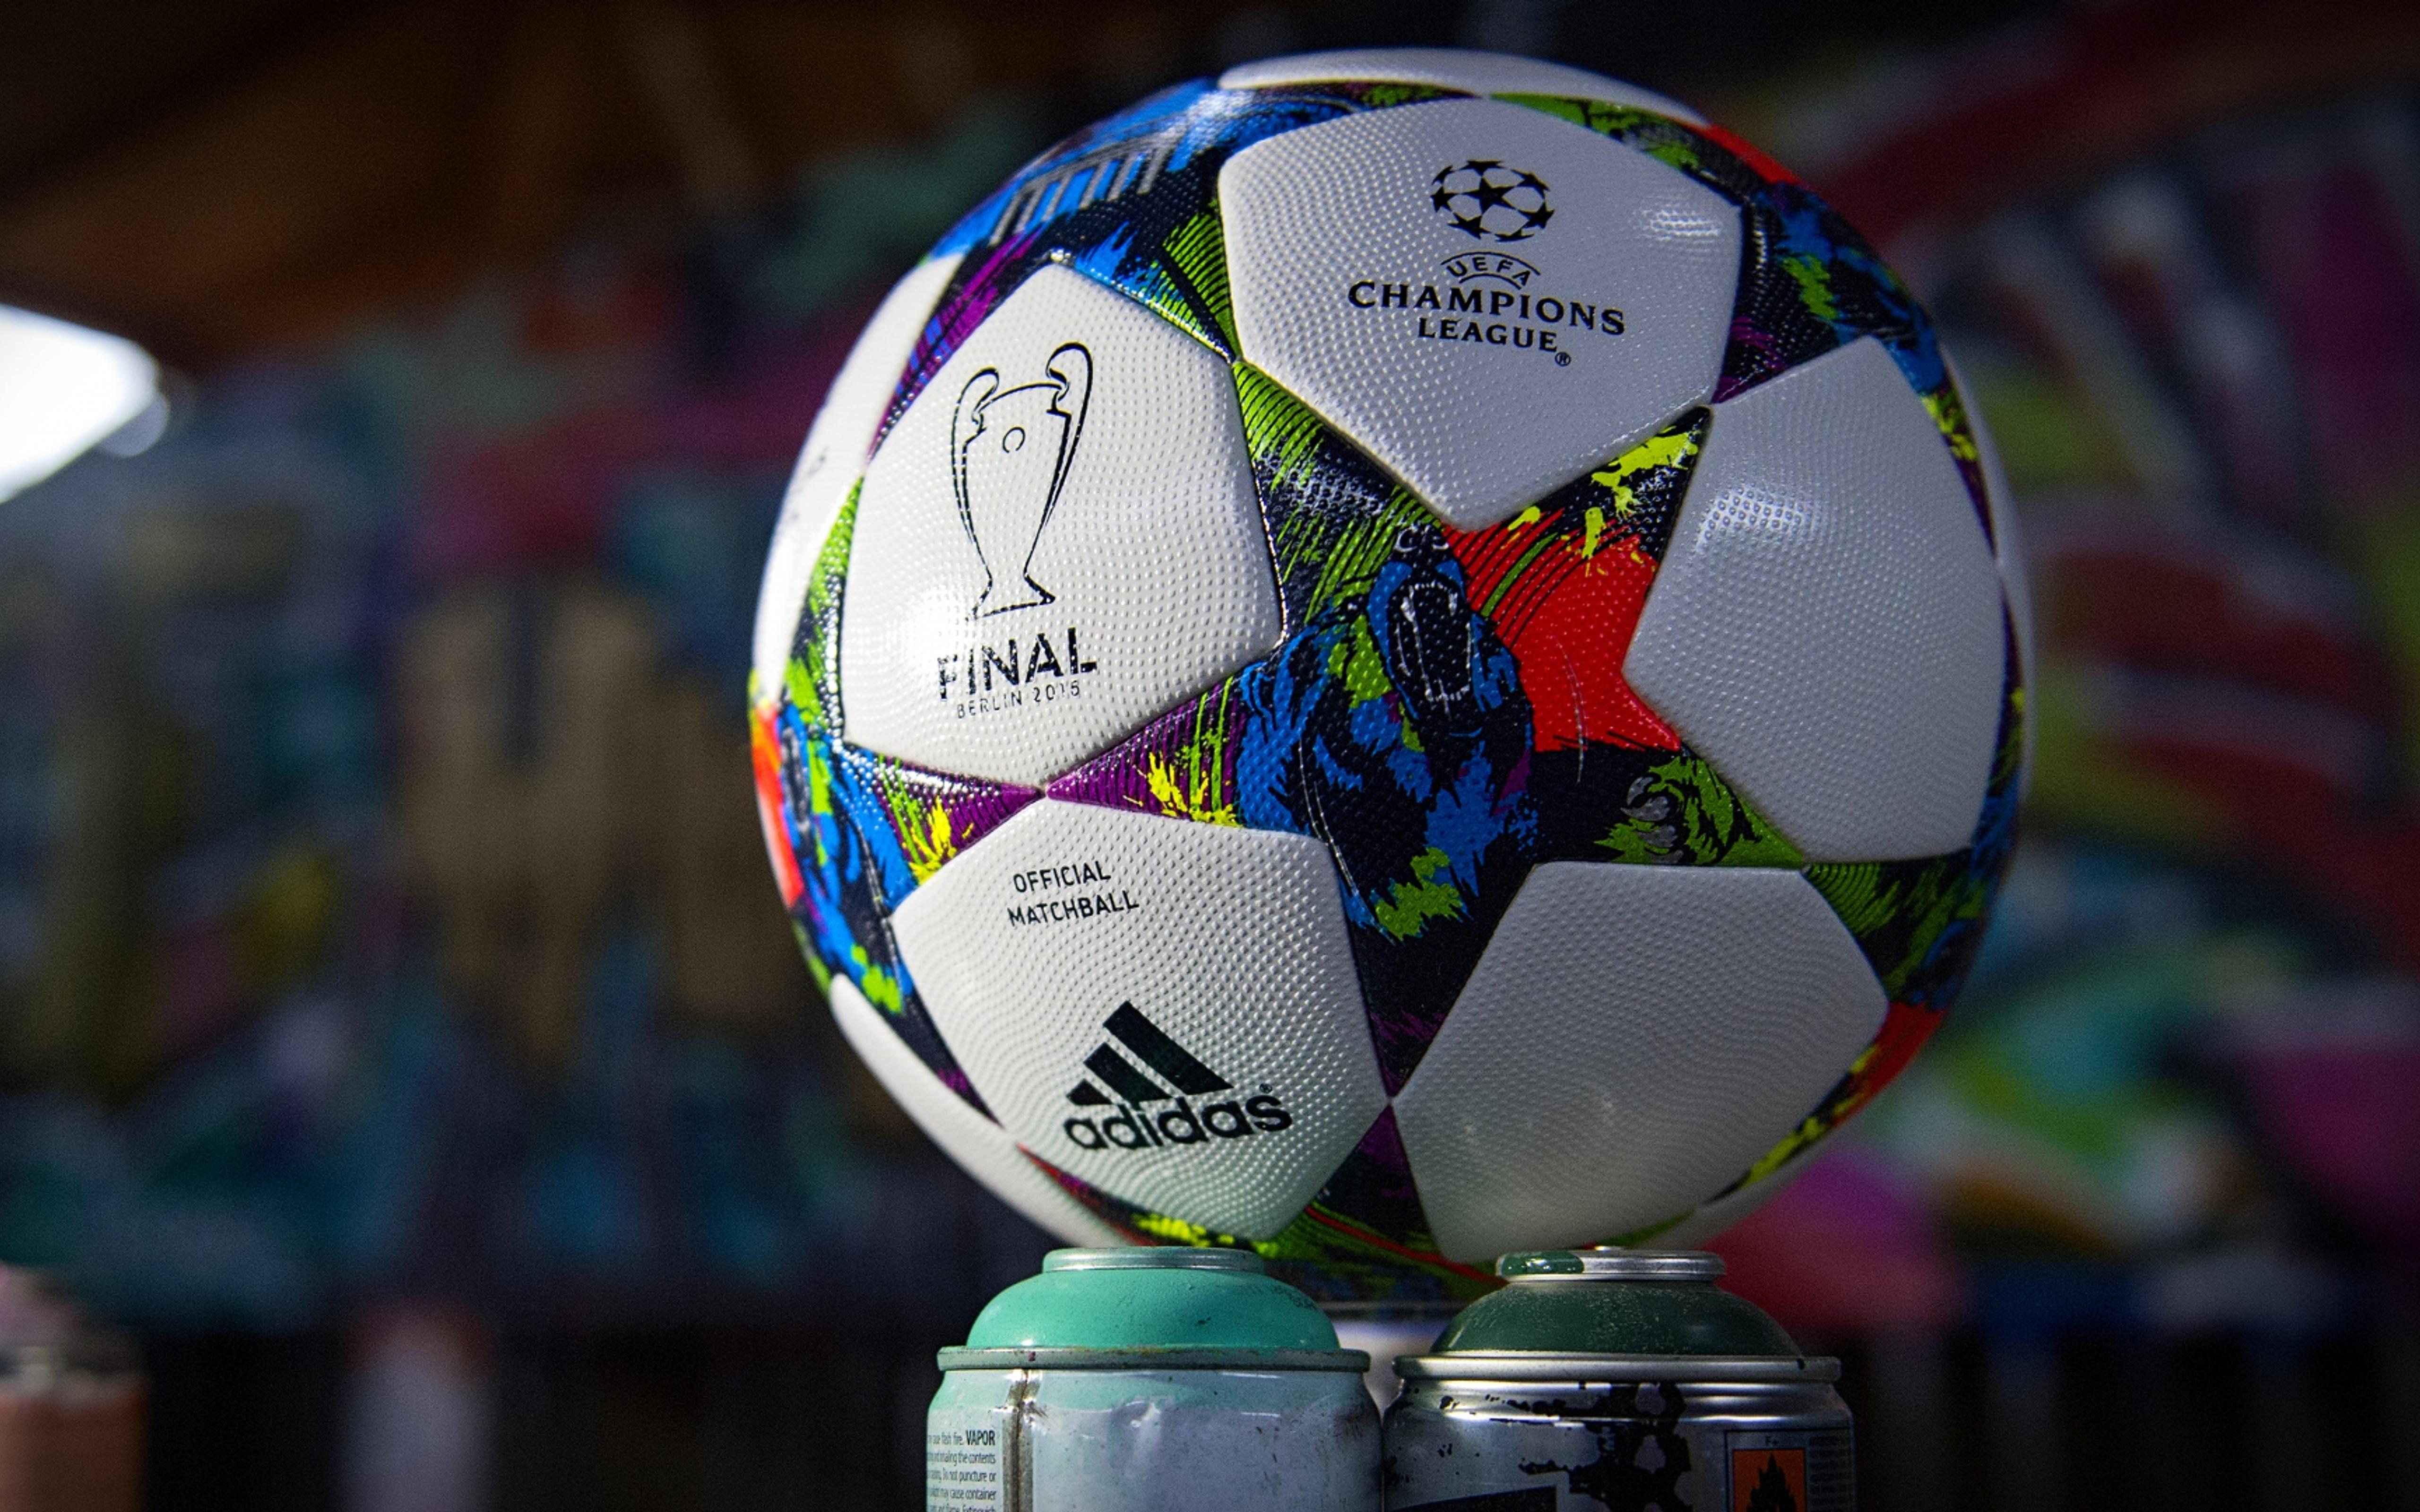 UEFA Champions League ball - Football wallpaper